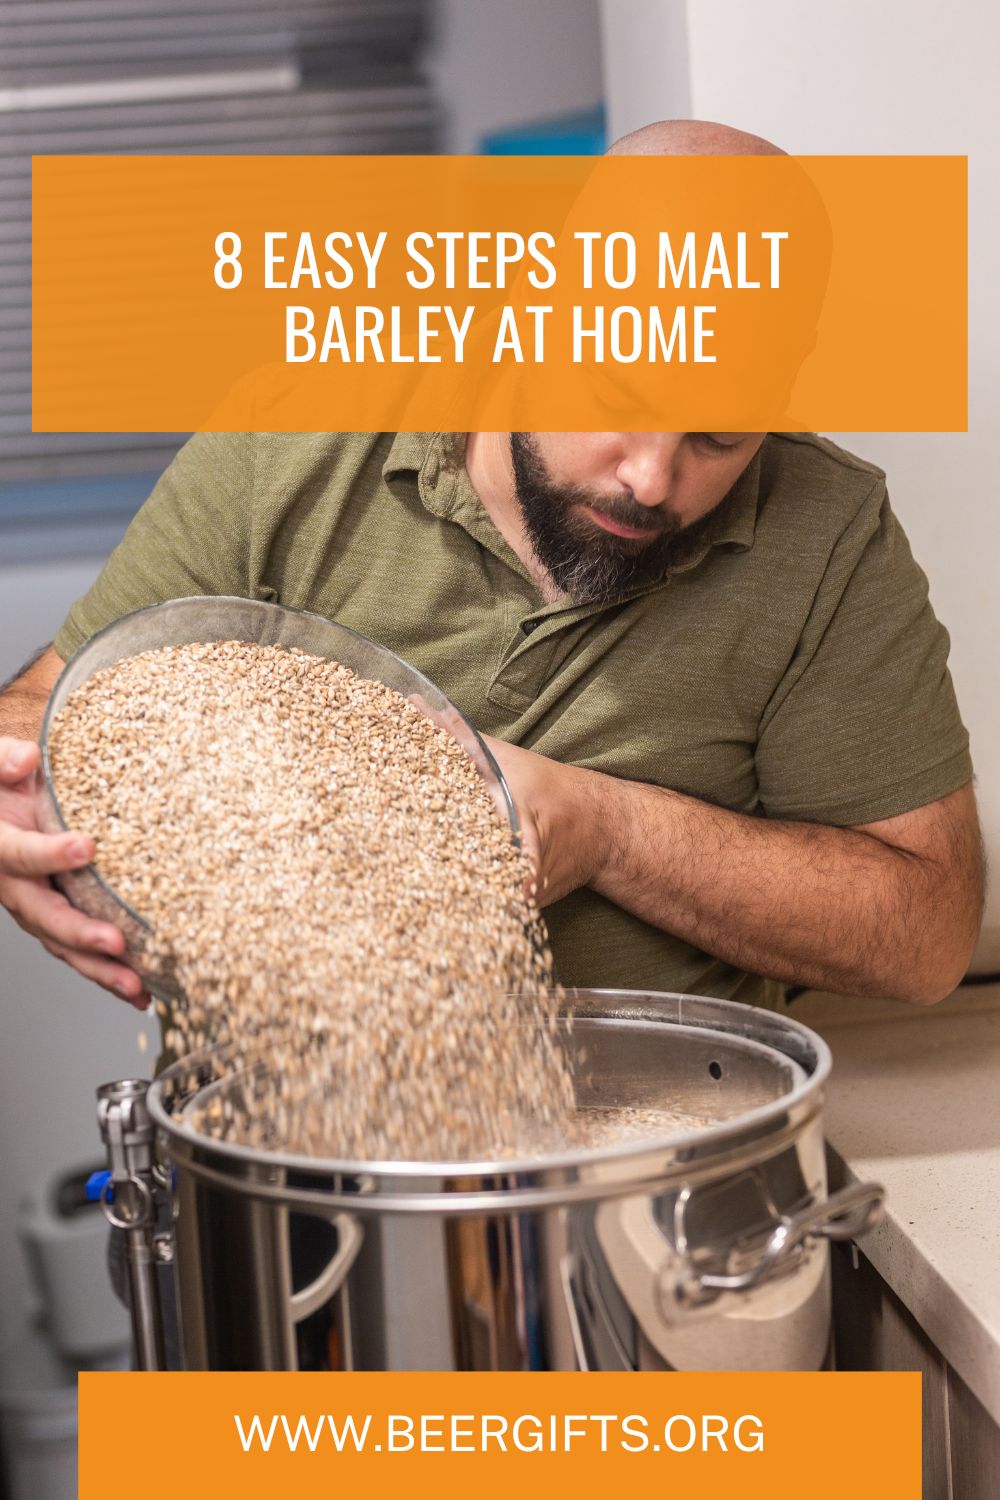 8 Easy Steps to Malt Barley at Home10